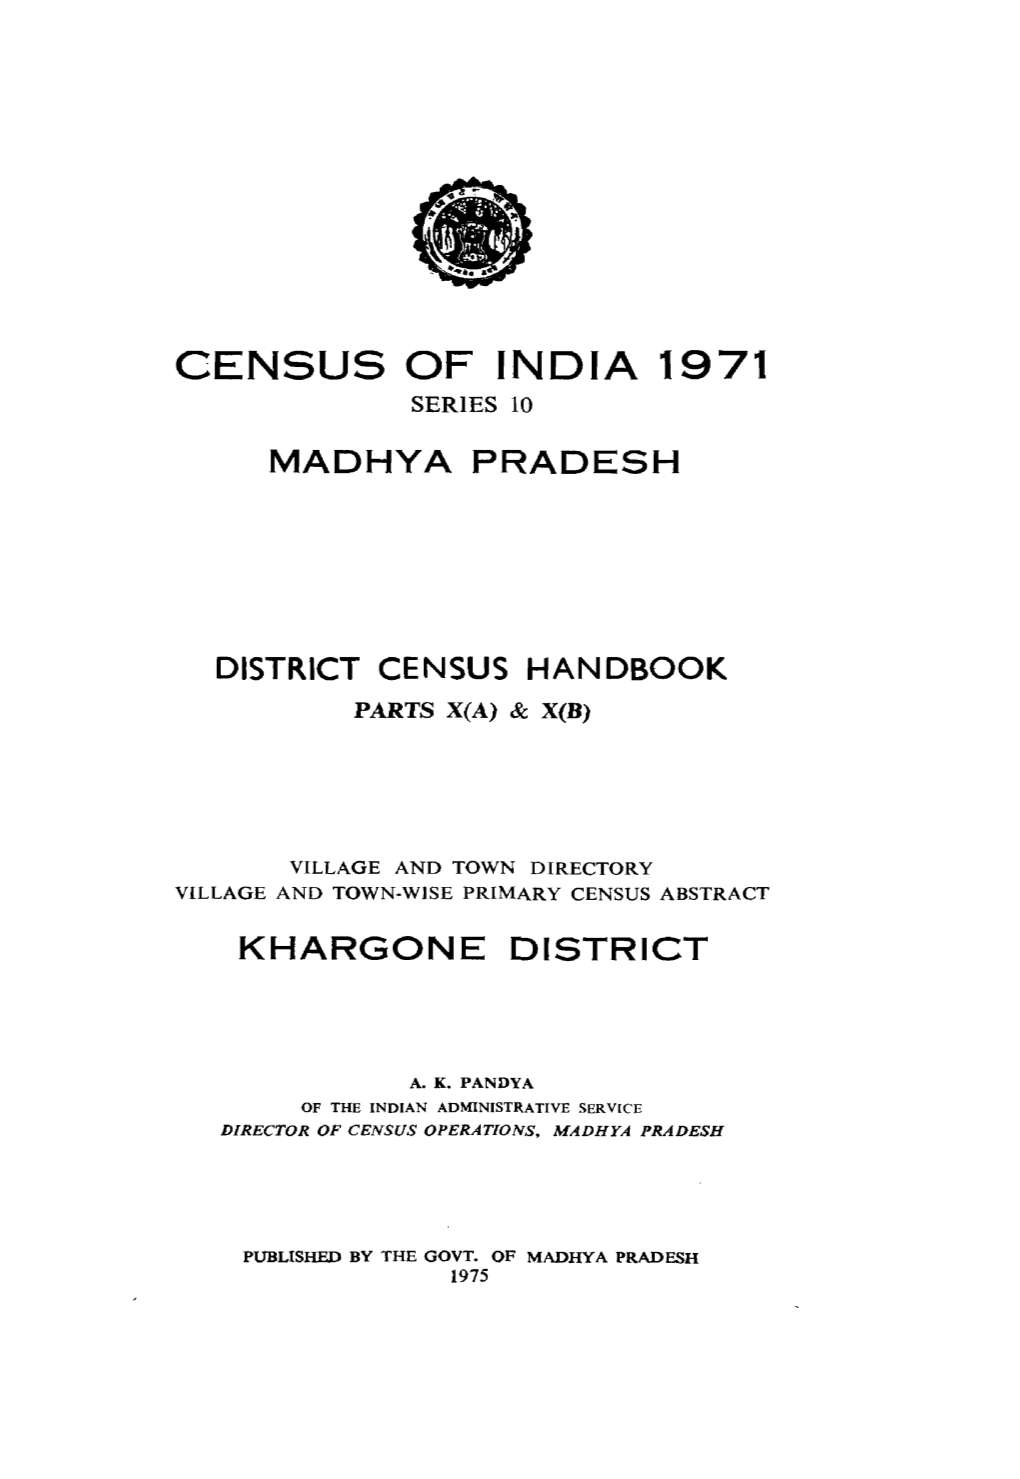 District Census Handbook, Khargone, Part X(A)